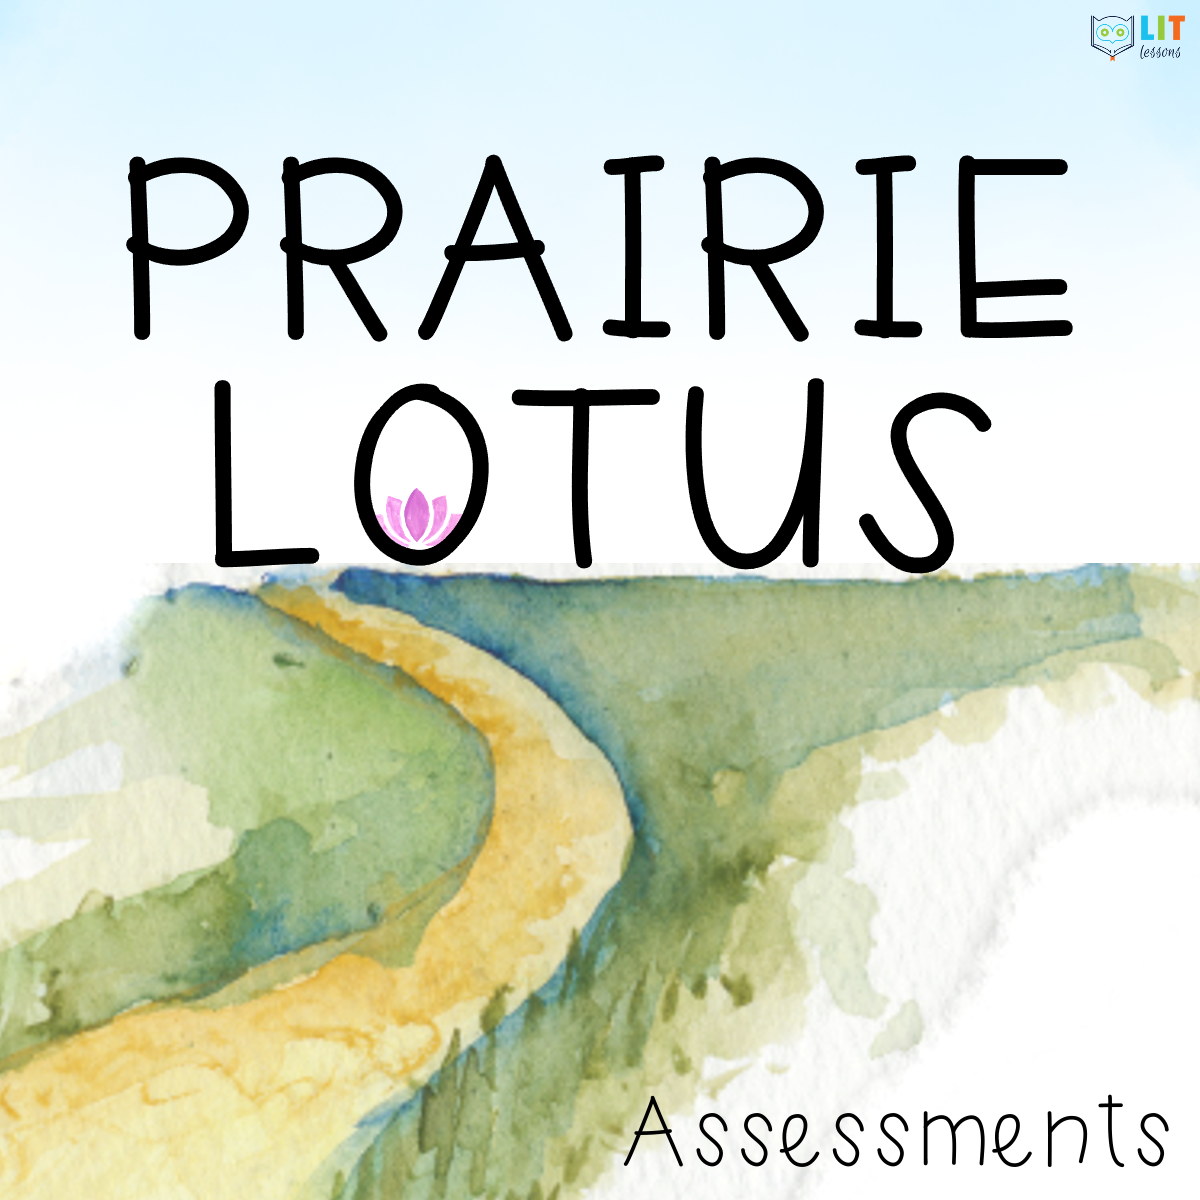 Prairie Lotus Assessments